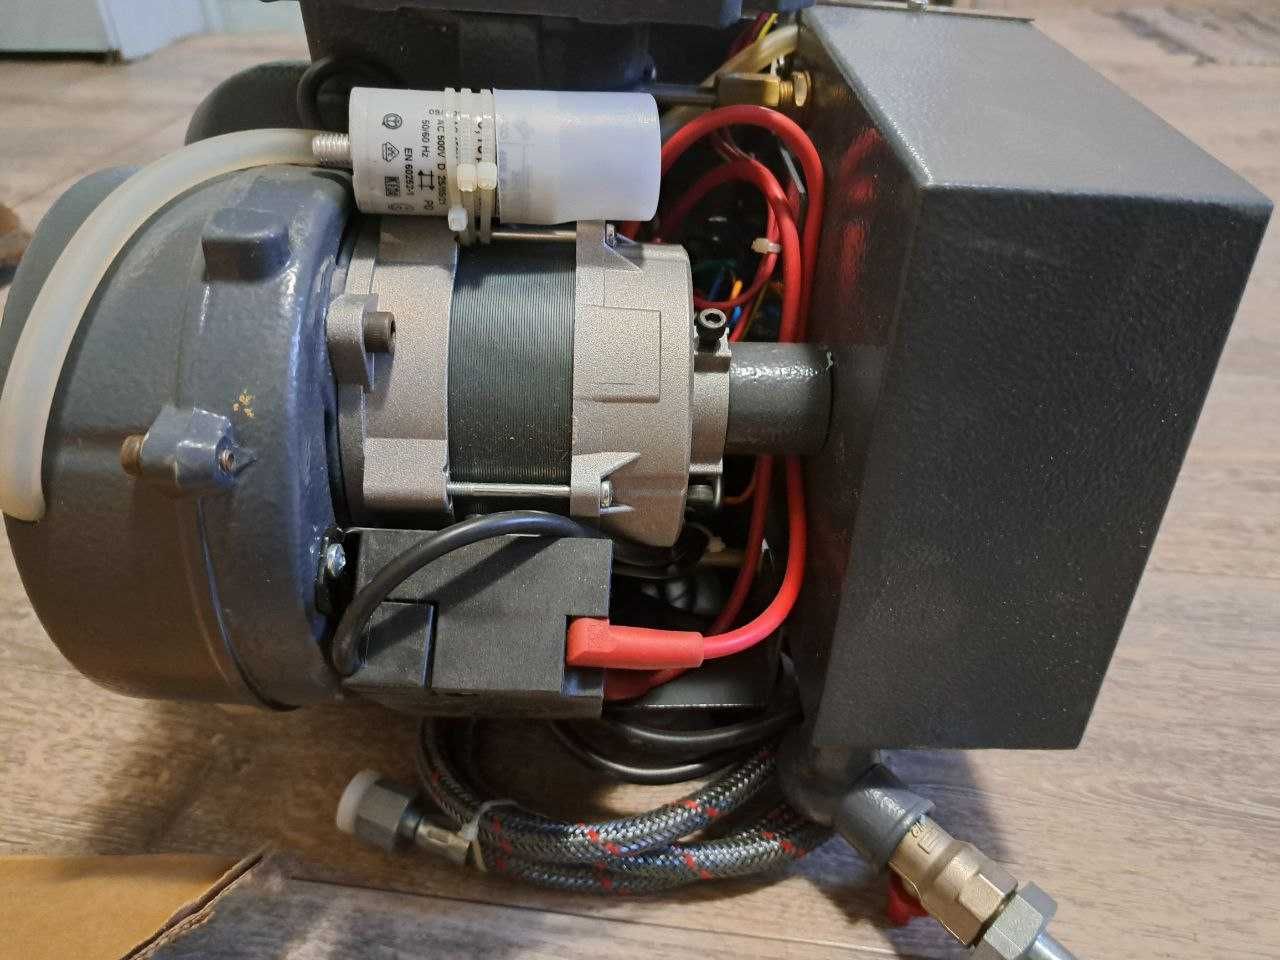 Горелка на отработанном масле Kroll KG/UB 20 (26-38 кВт)